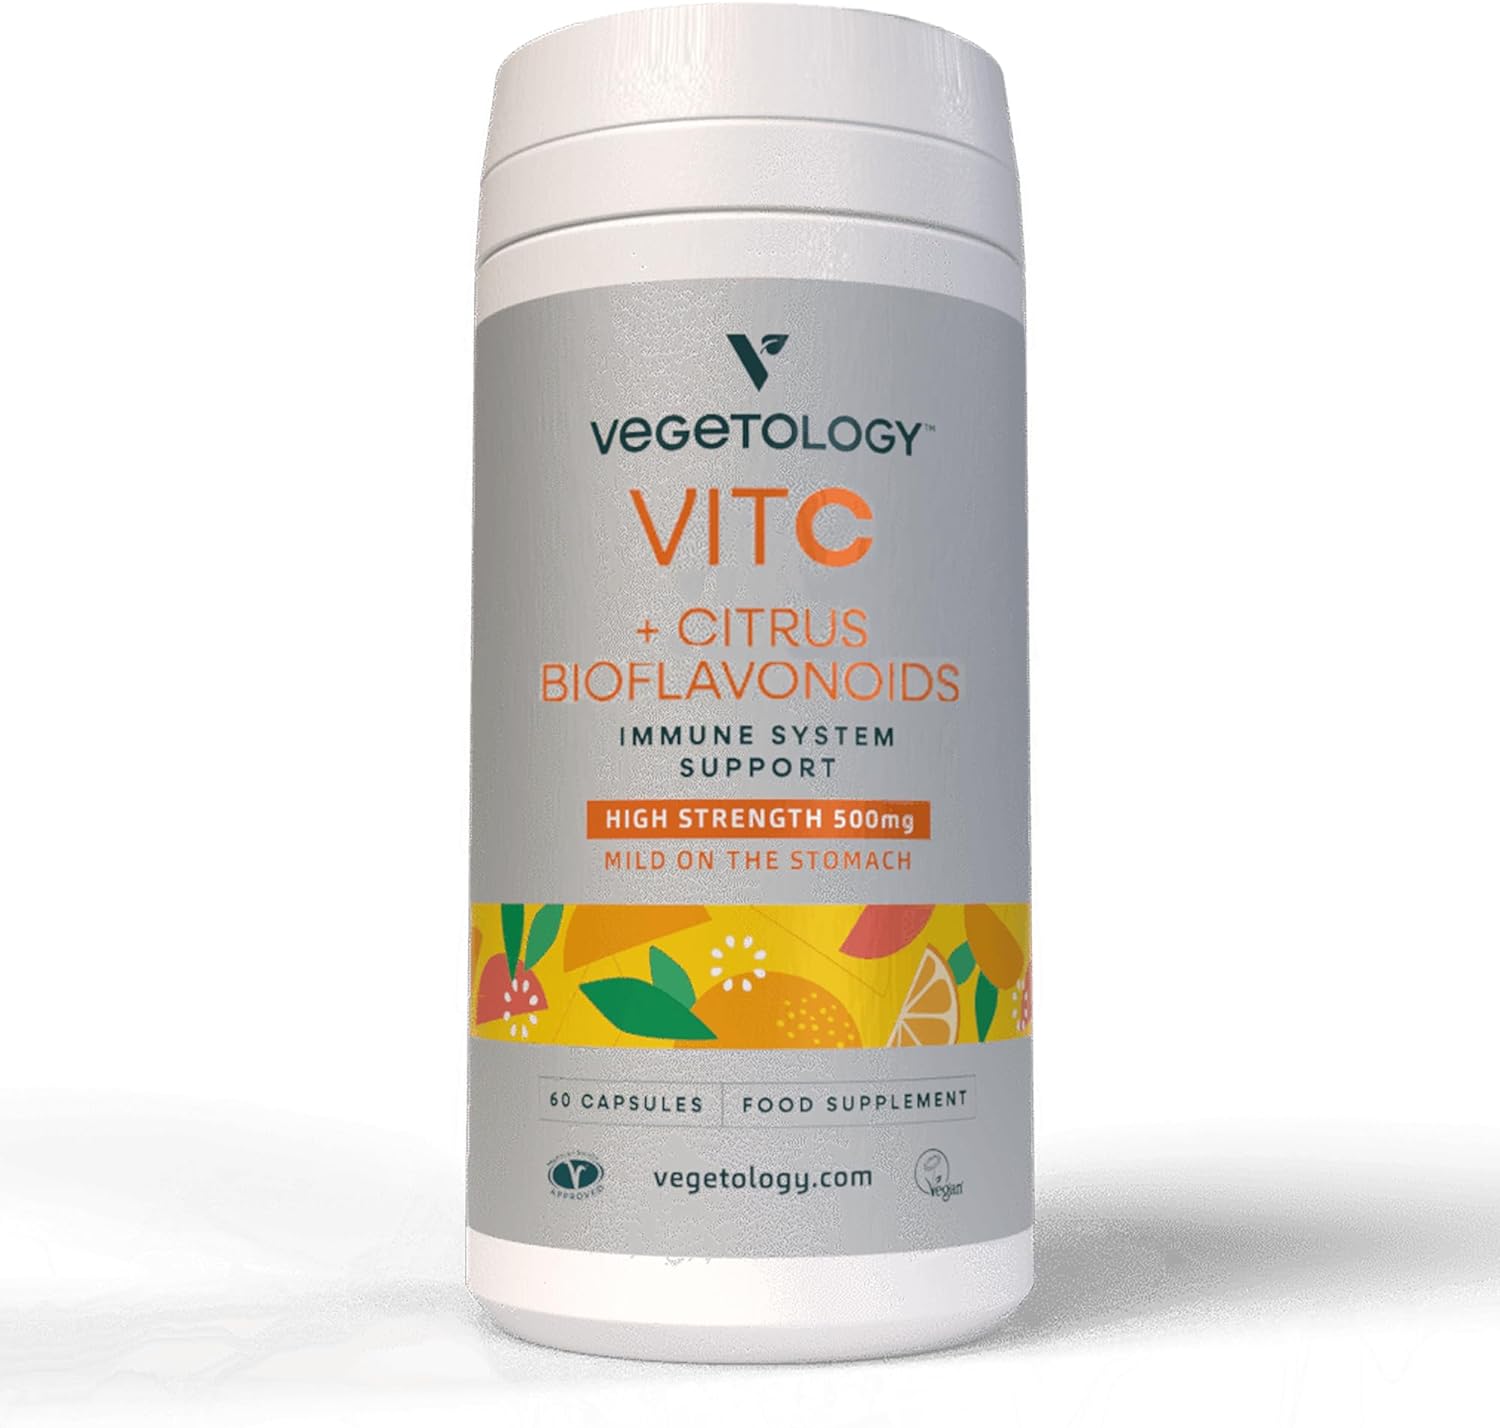 VEGETOLOGY Vegan Vitamin C Supplements ? VIT C + Citrus Bioflavonoids